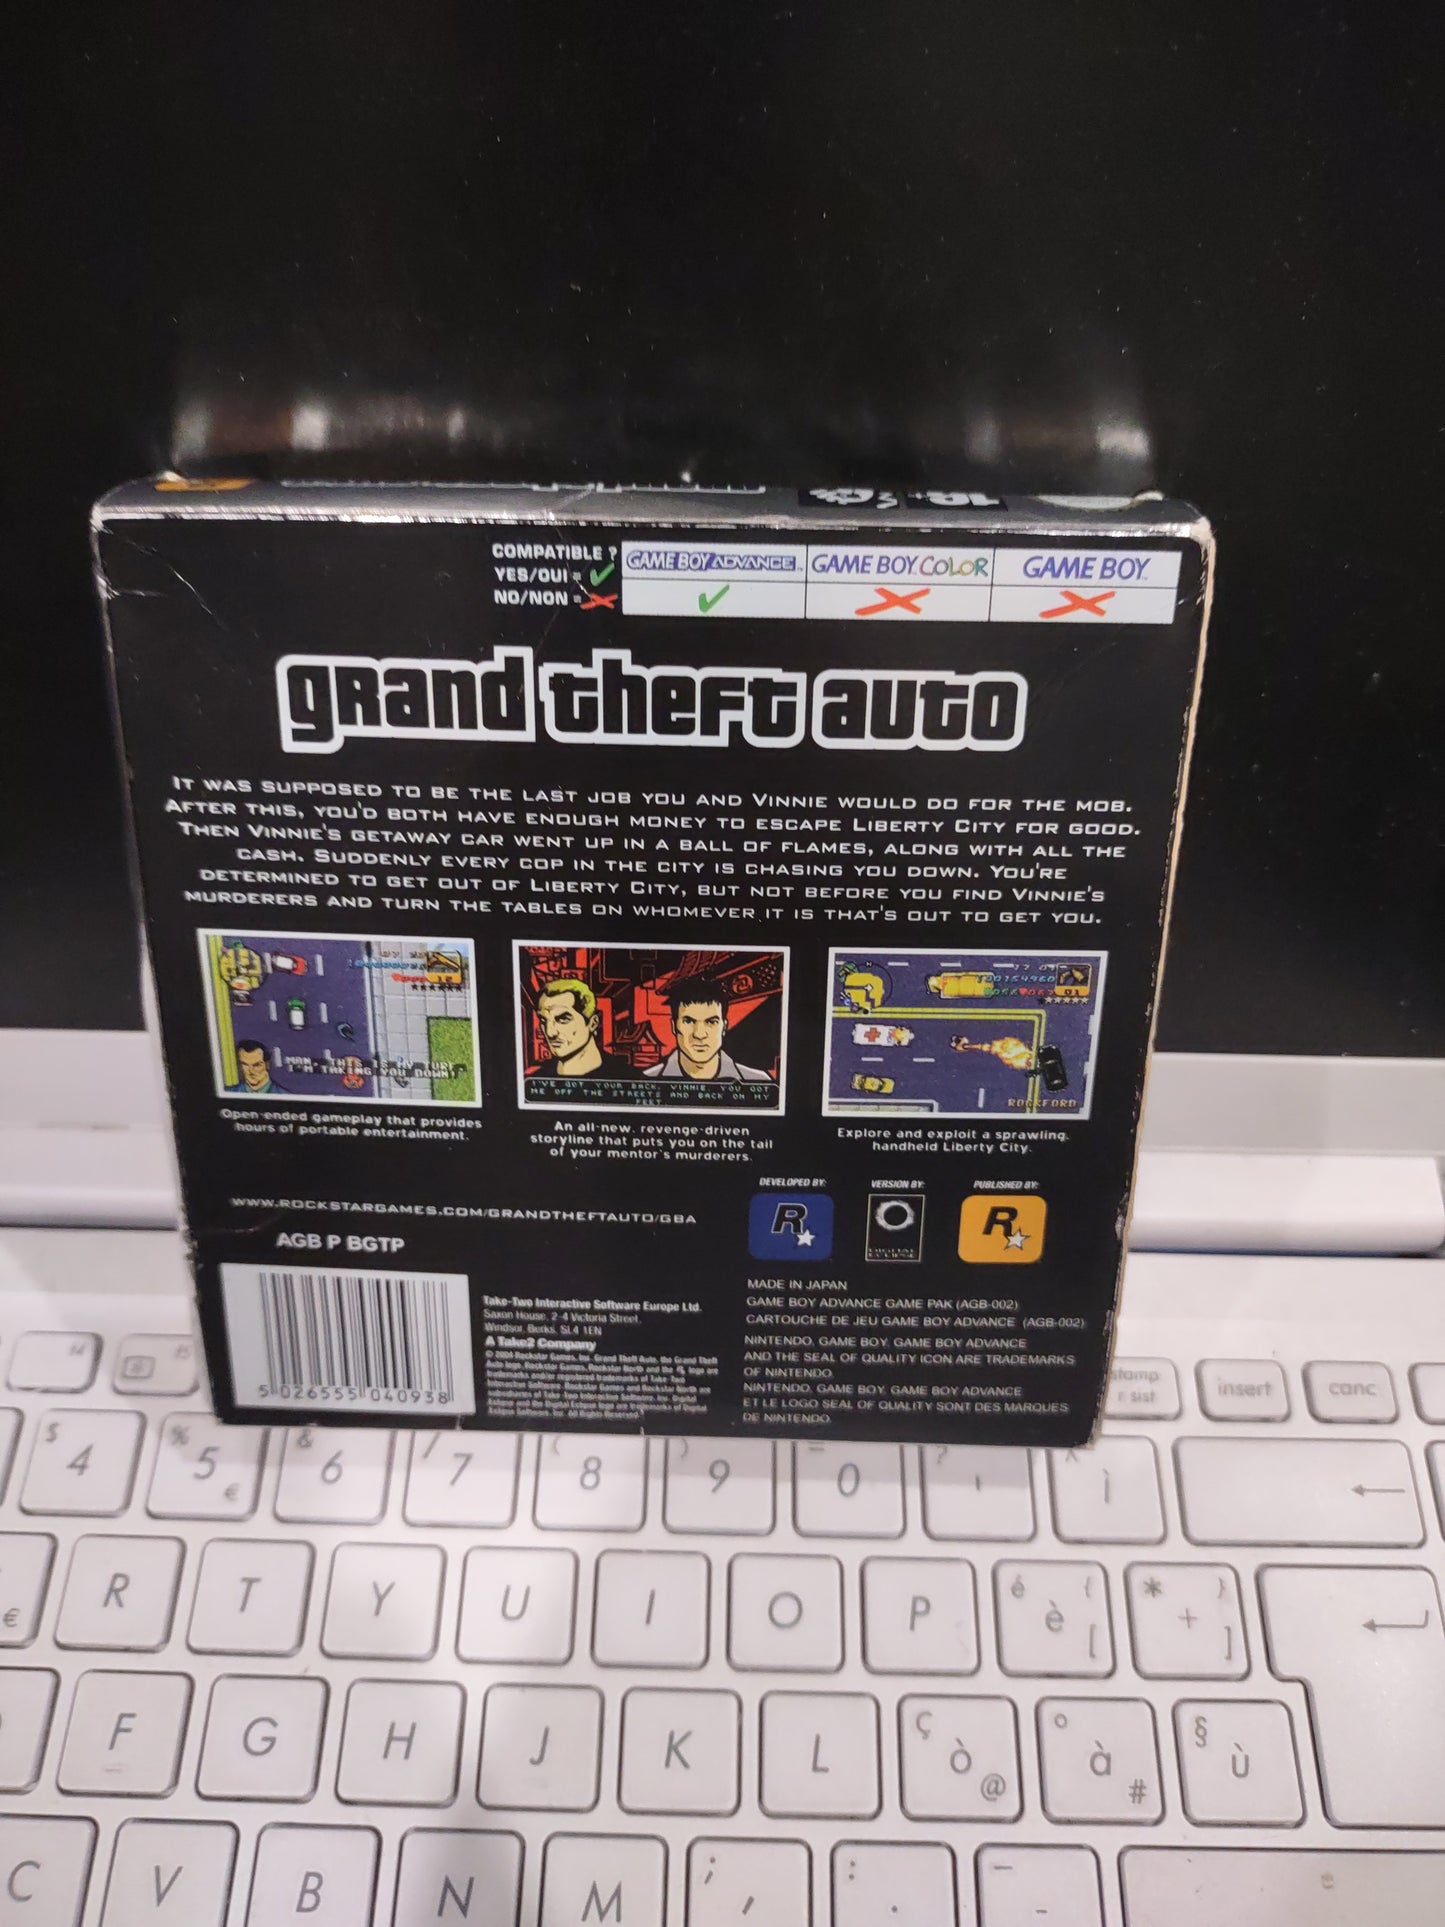 Gioco Nintendo game boy Advance GTA Grand theft auto Eur